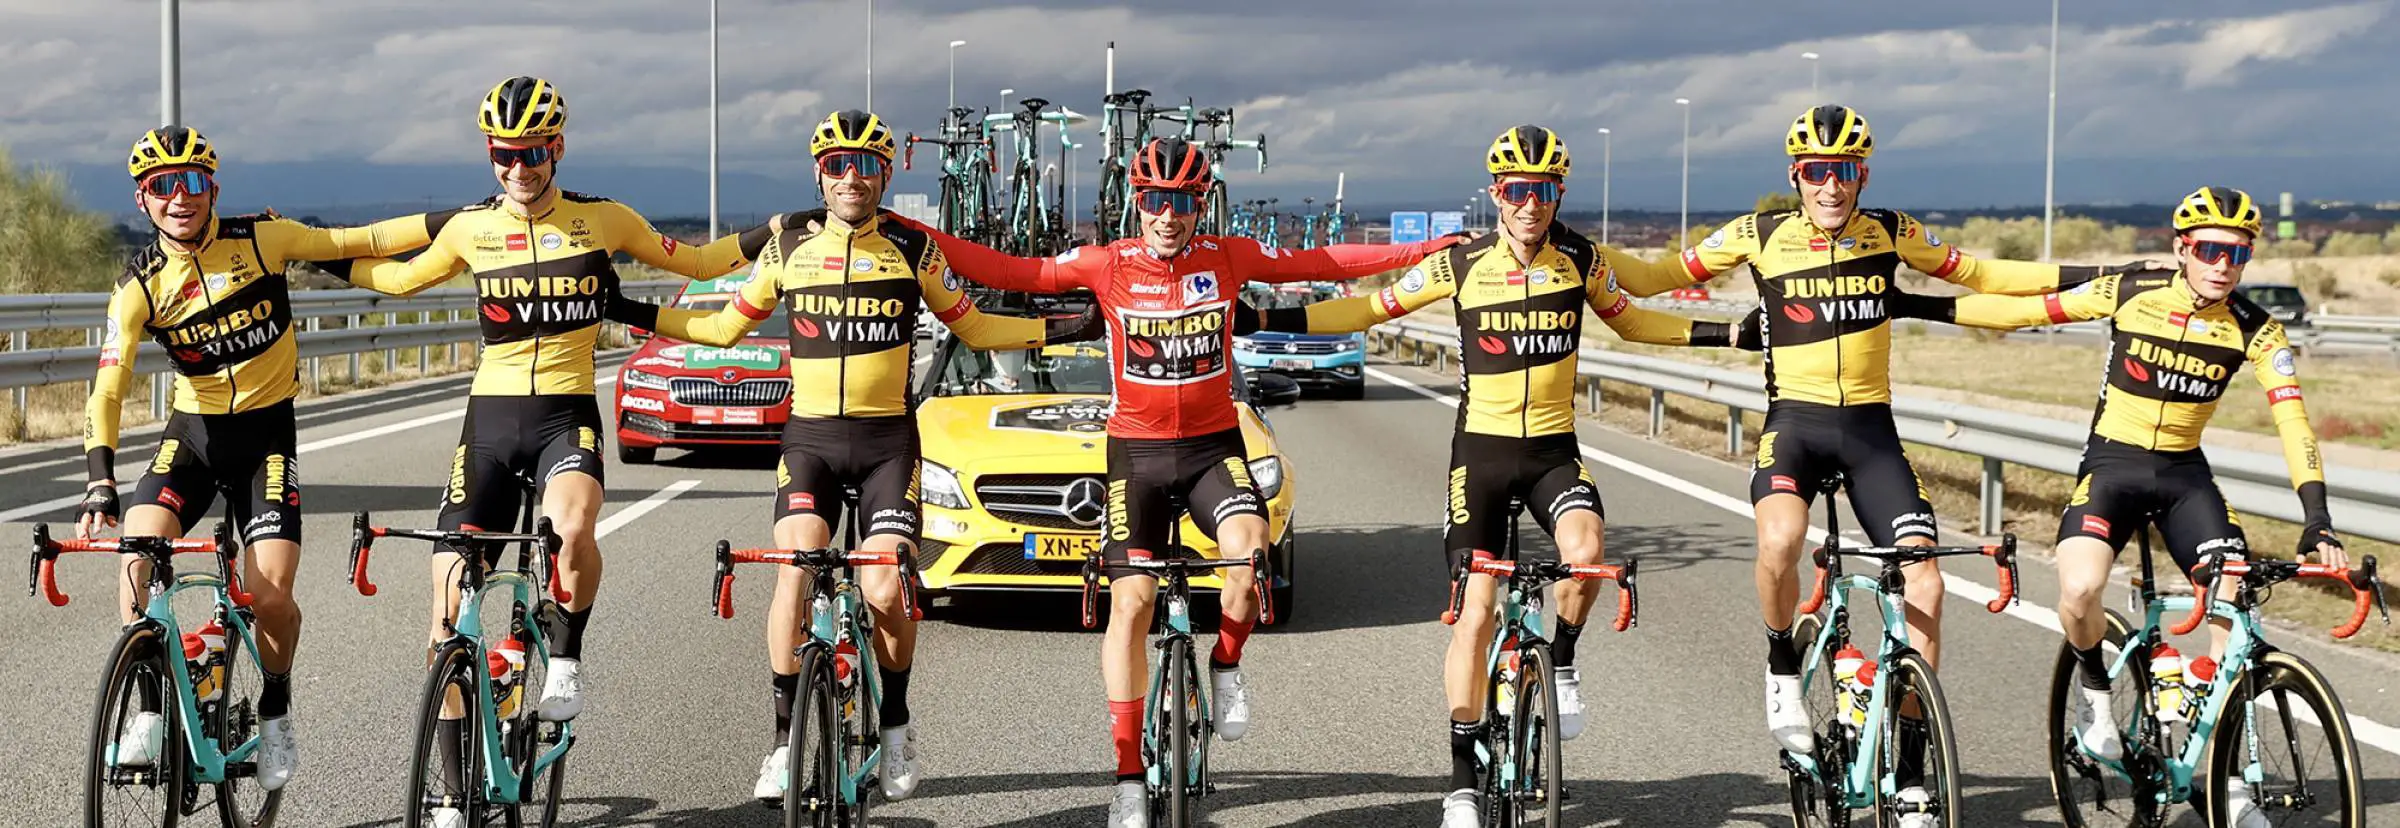 Jumbo Visma winning team courtesy La Vuelta.jpg